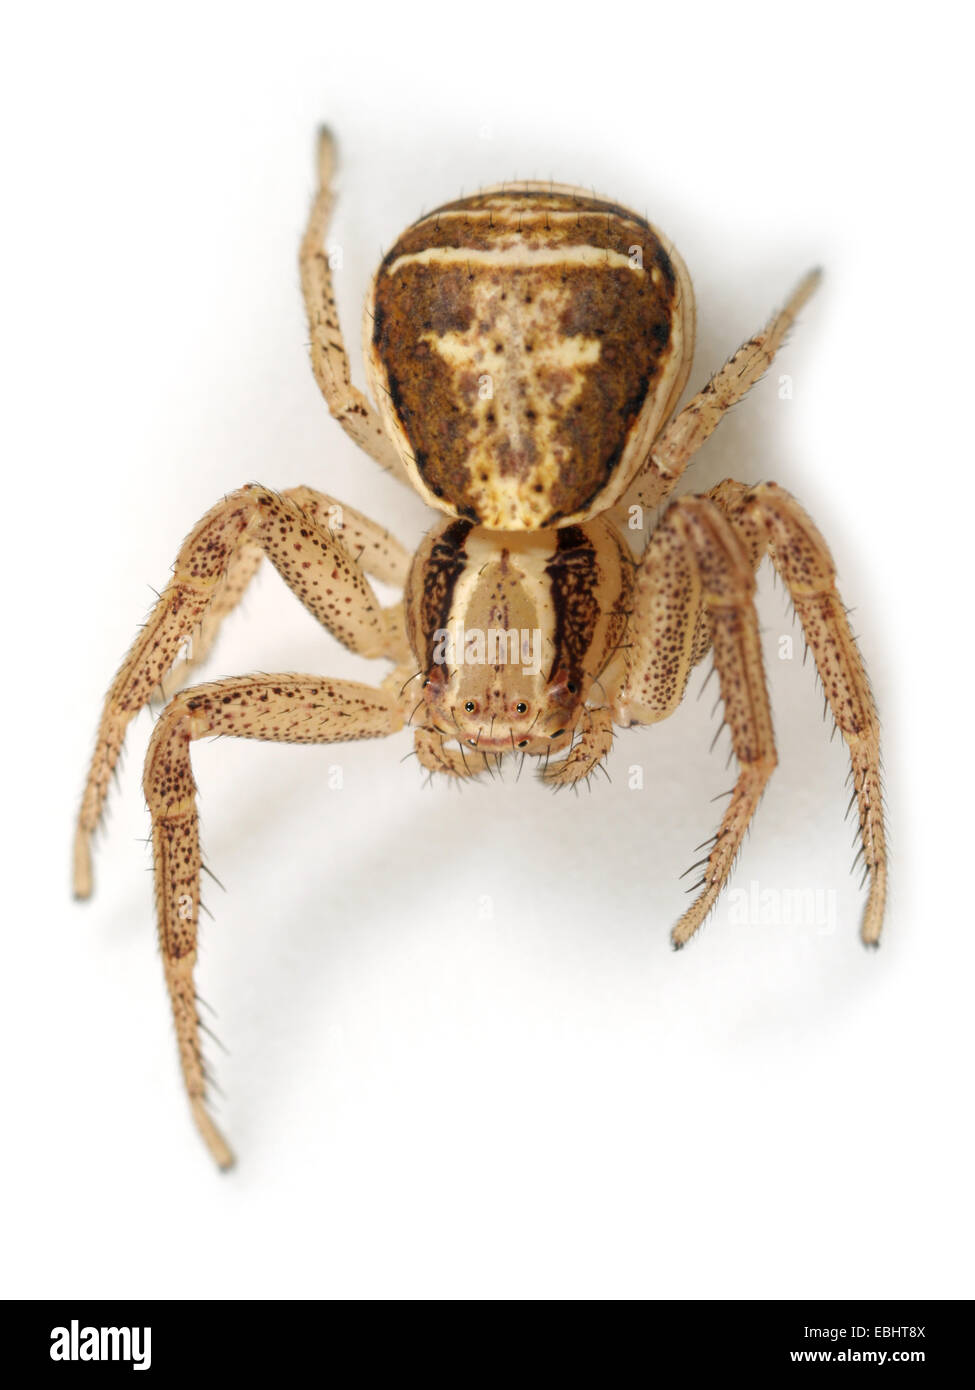 (Xysticus ulmi) hembra Xysticus ulmi spider sobre fondo blanco. Familia Thomisidae, arañas cangrejo. Foto de stock